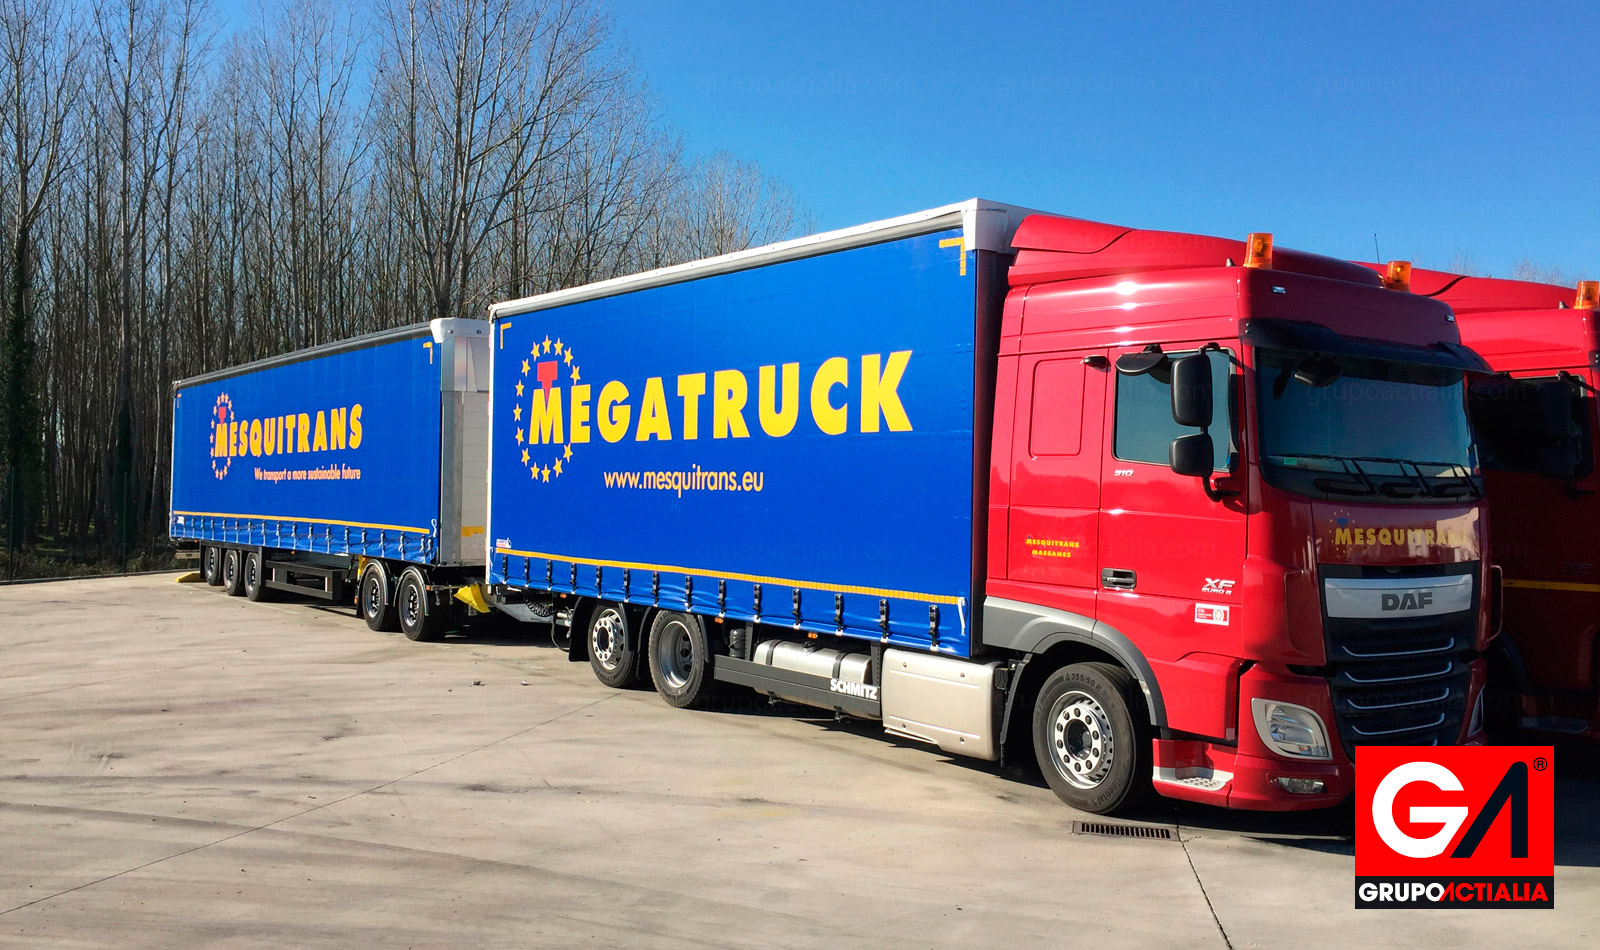 Mesquitrans, nuevos camiones Megatruck fabricados por Schimtz Cargobull